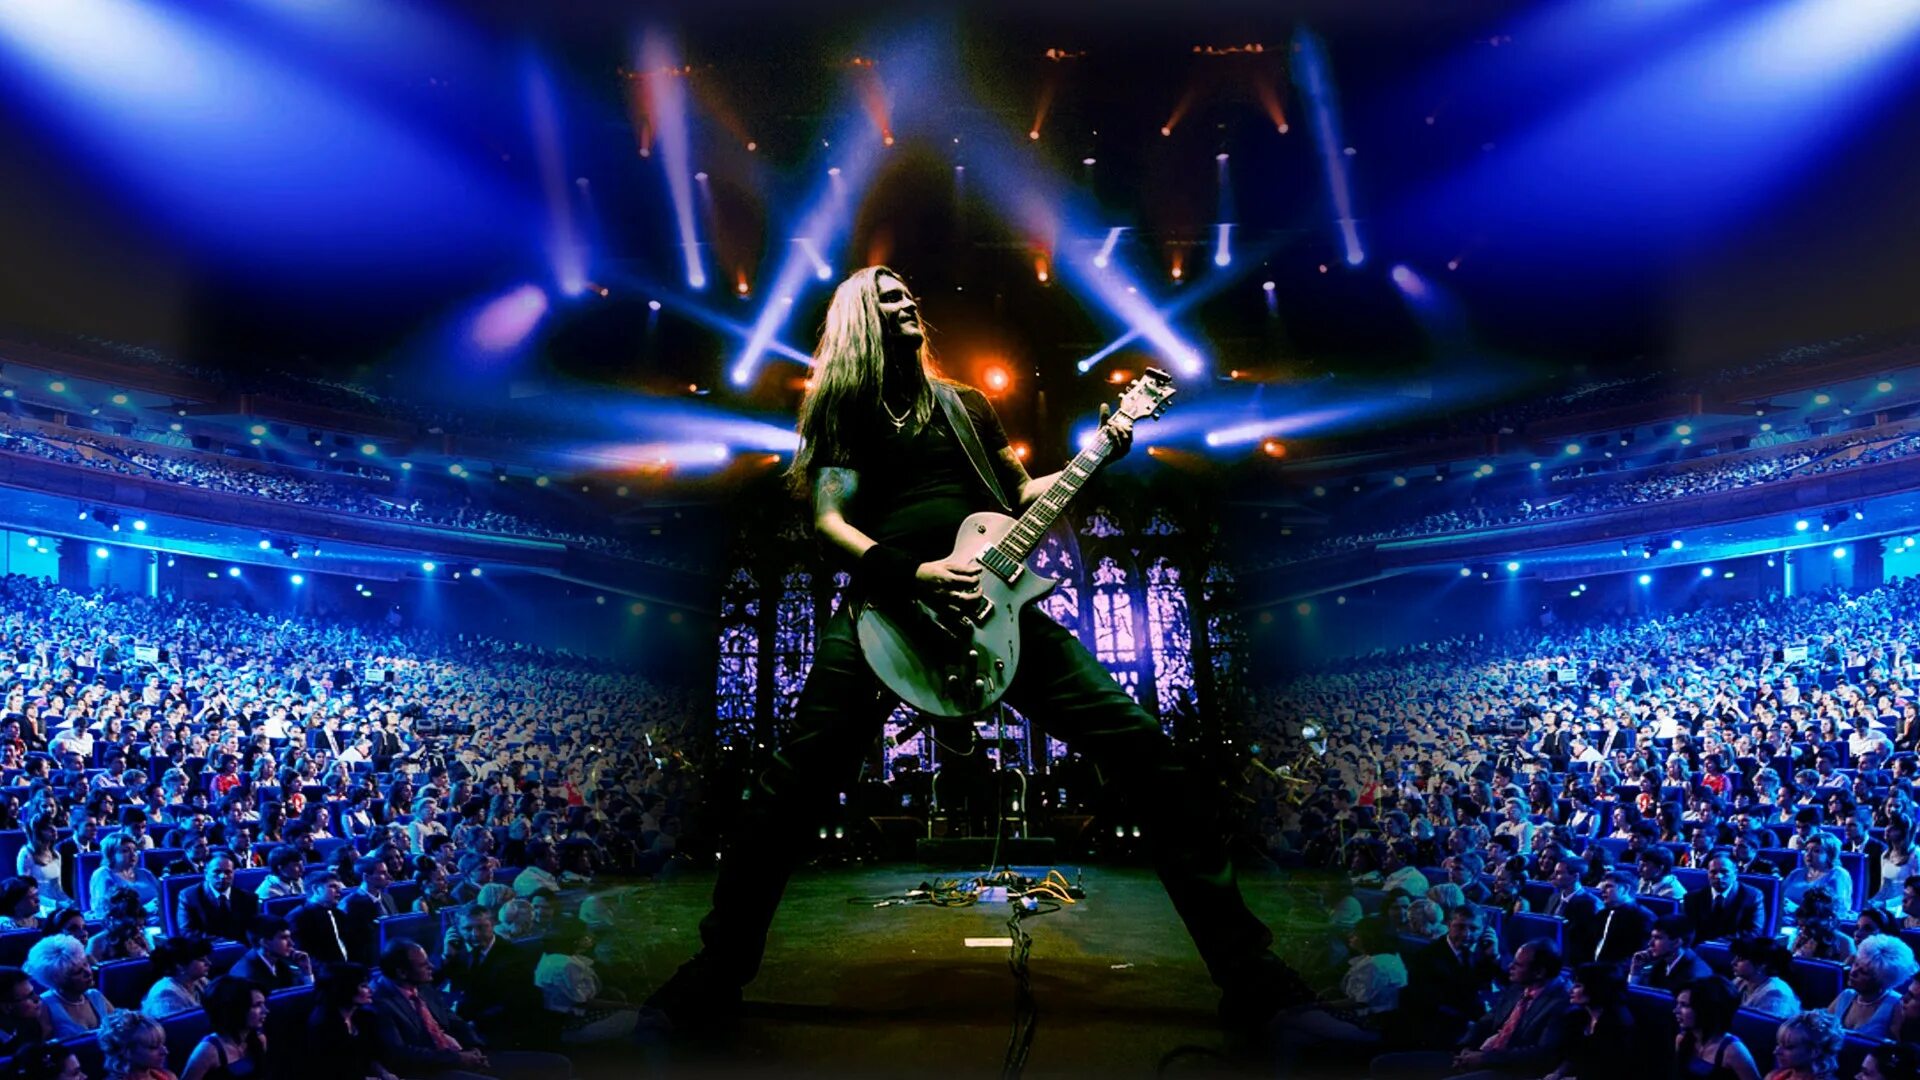 Metallica show. Концерт металлика трибьют. Metallica show s&m Tribute с симфоническим оркестром. Металлика 2022 концерт. Металлика Кремлевский дворец.